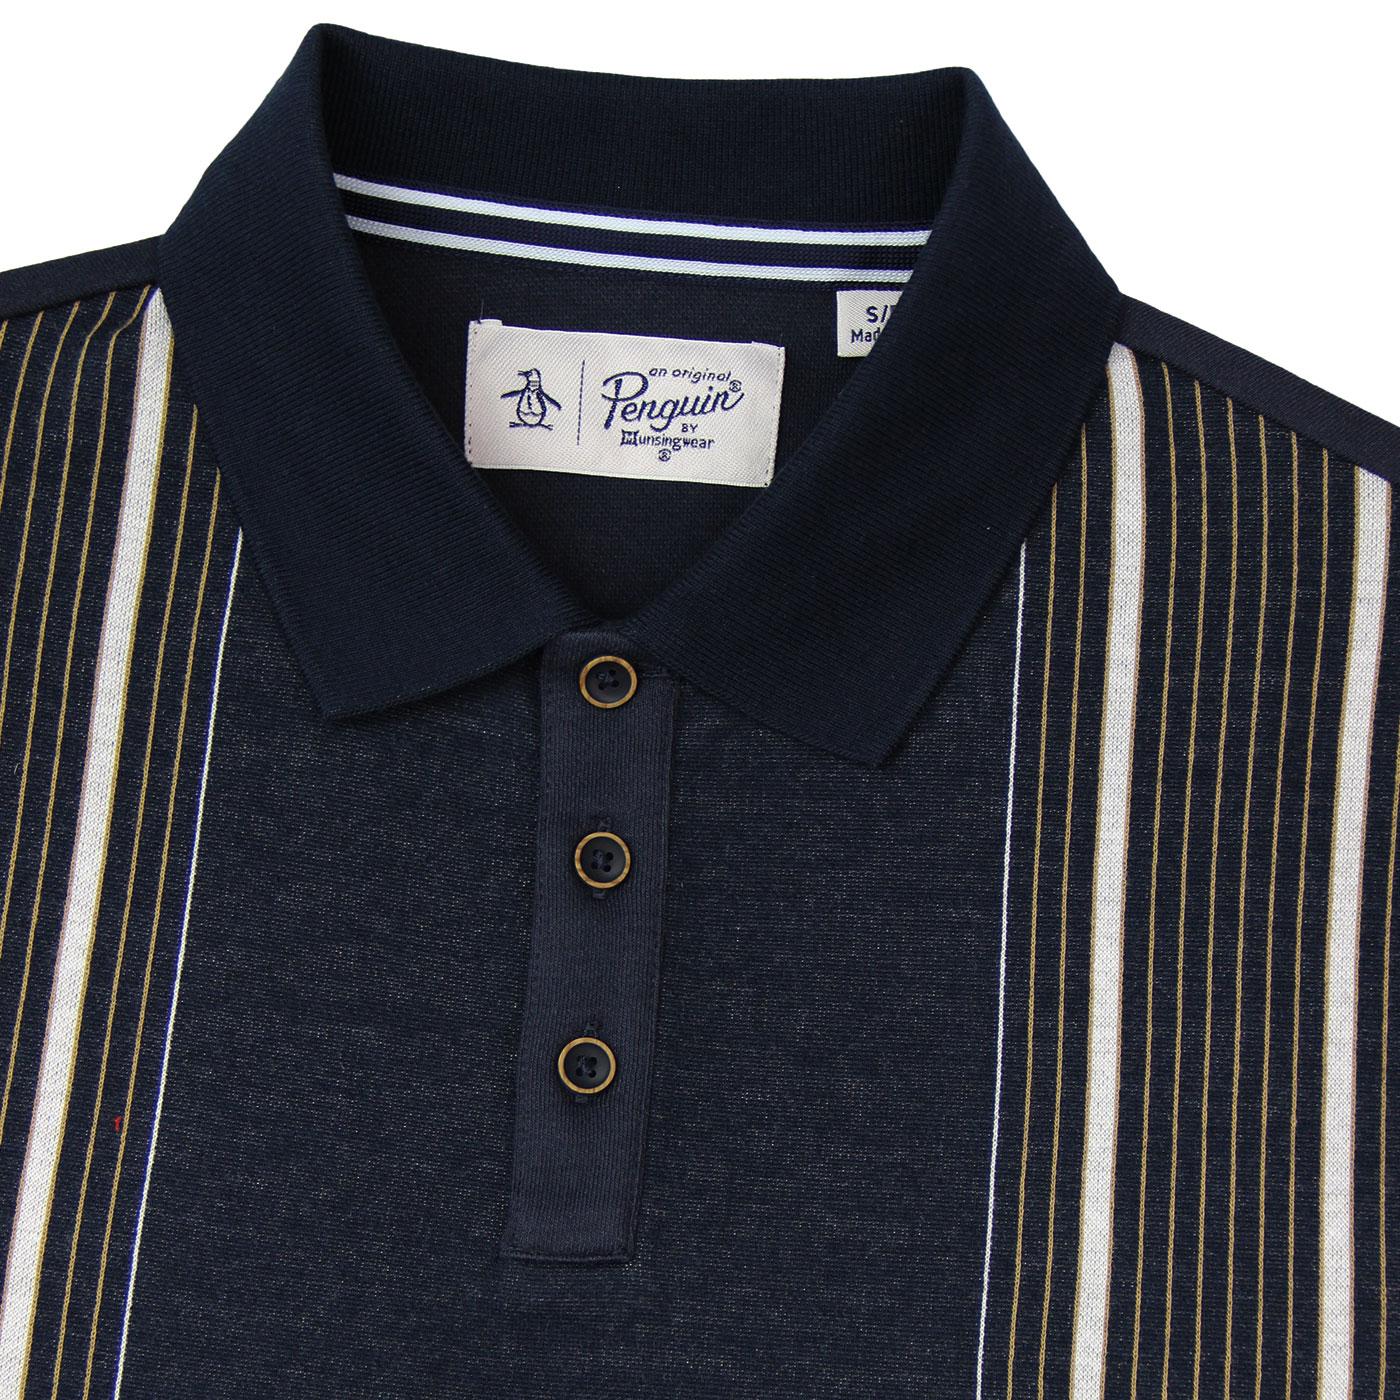 ORIGINAL PENGUIN Retro 1960s Mod Multi Stripe Polo Shirt